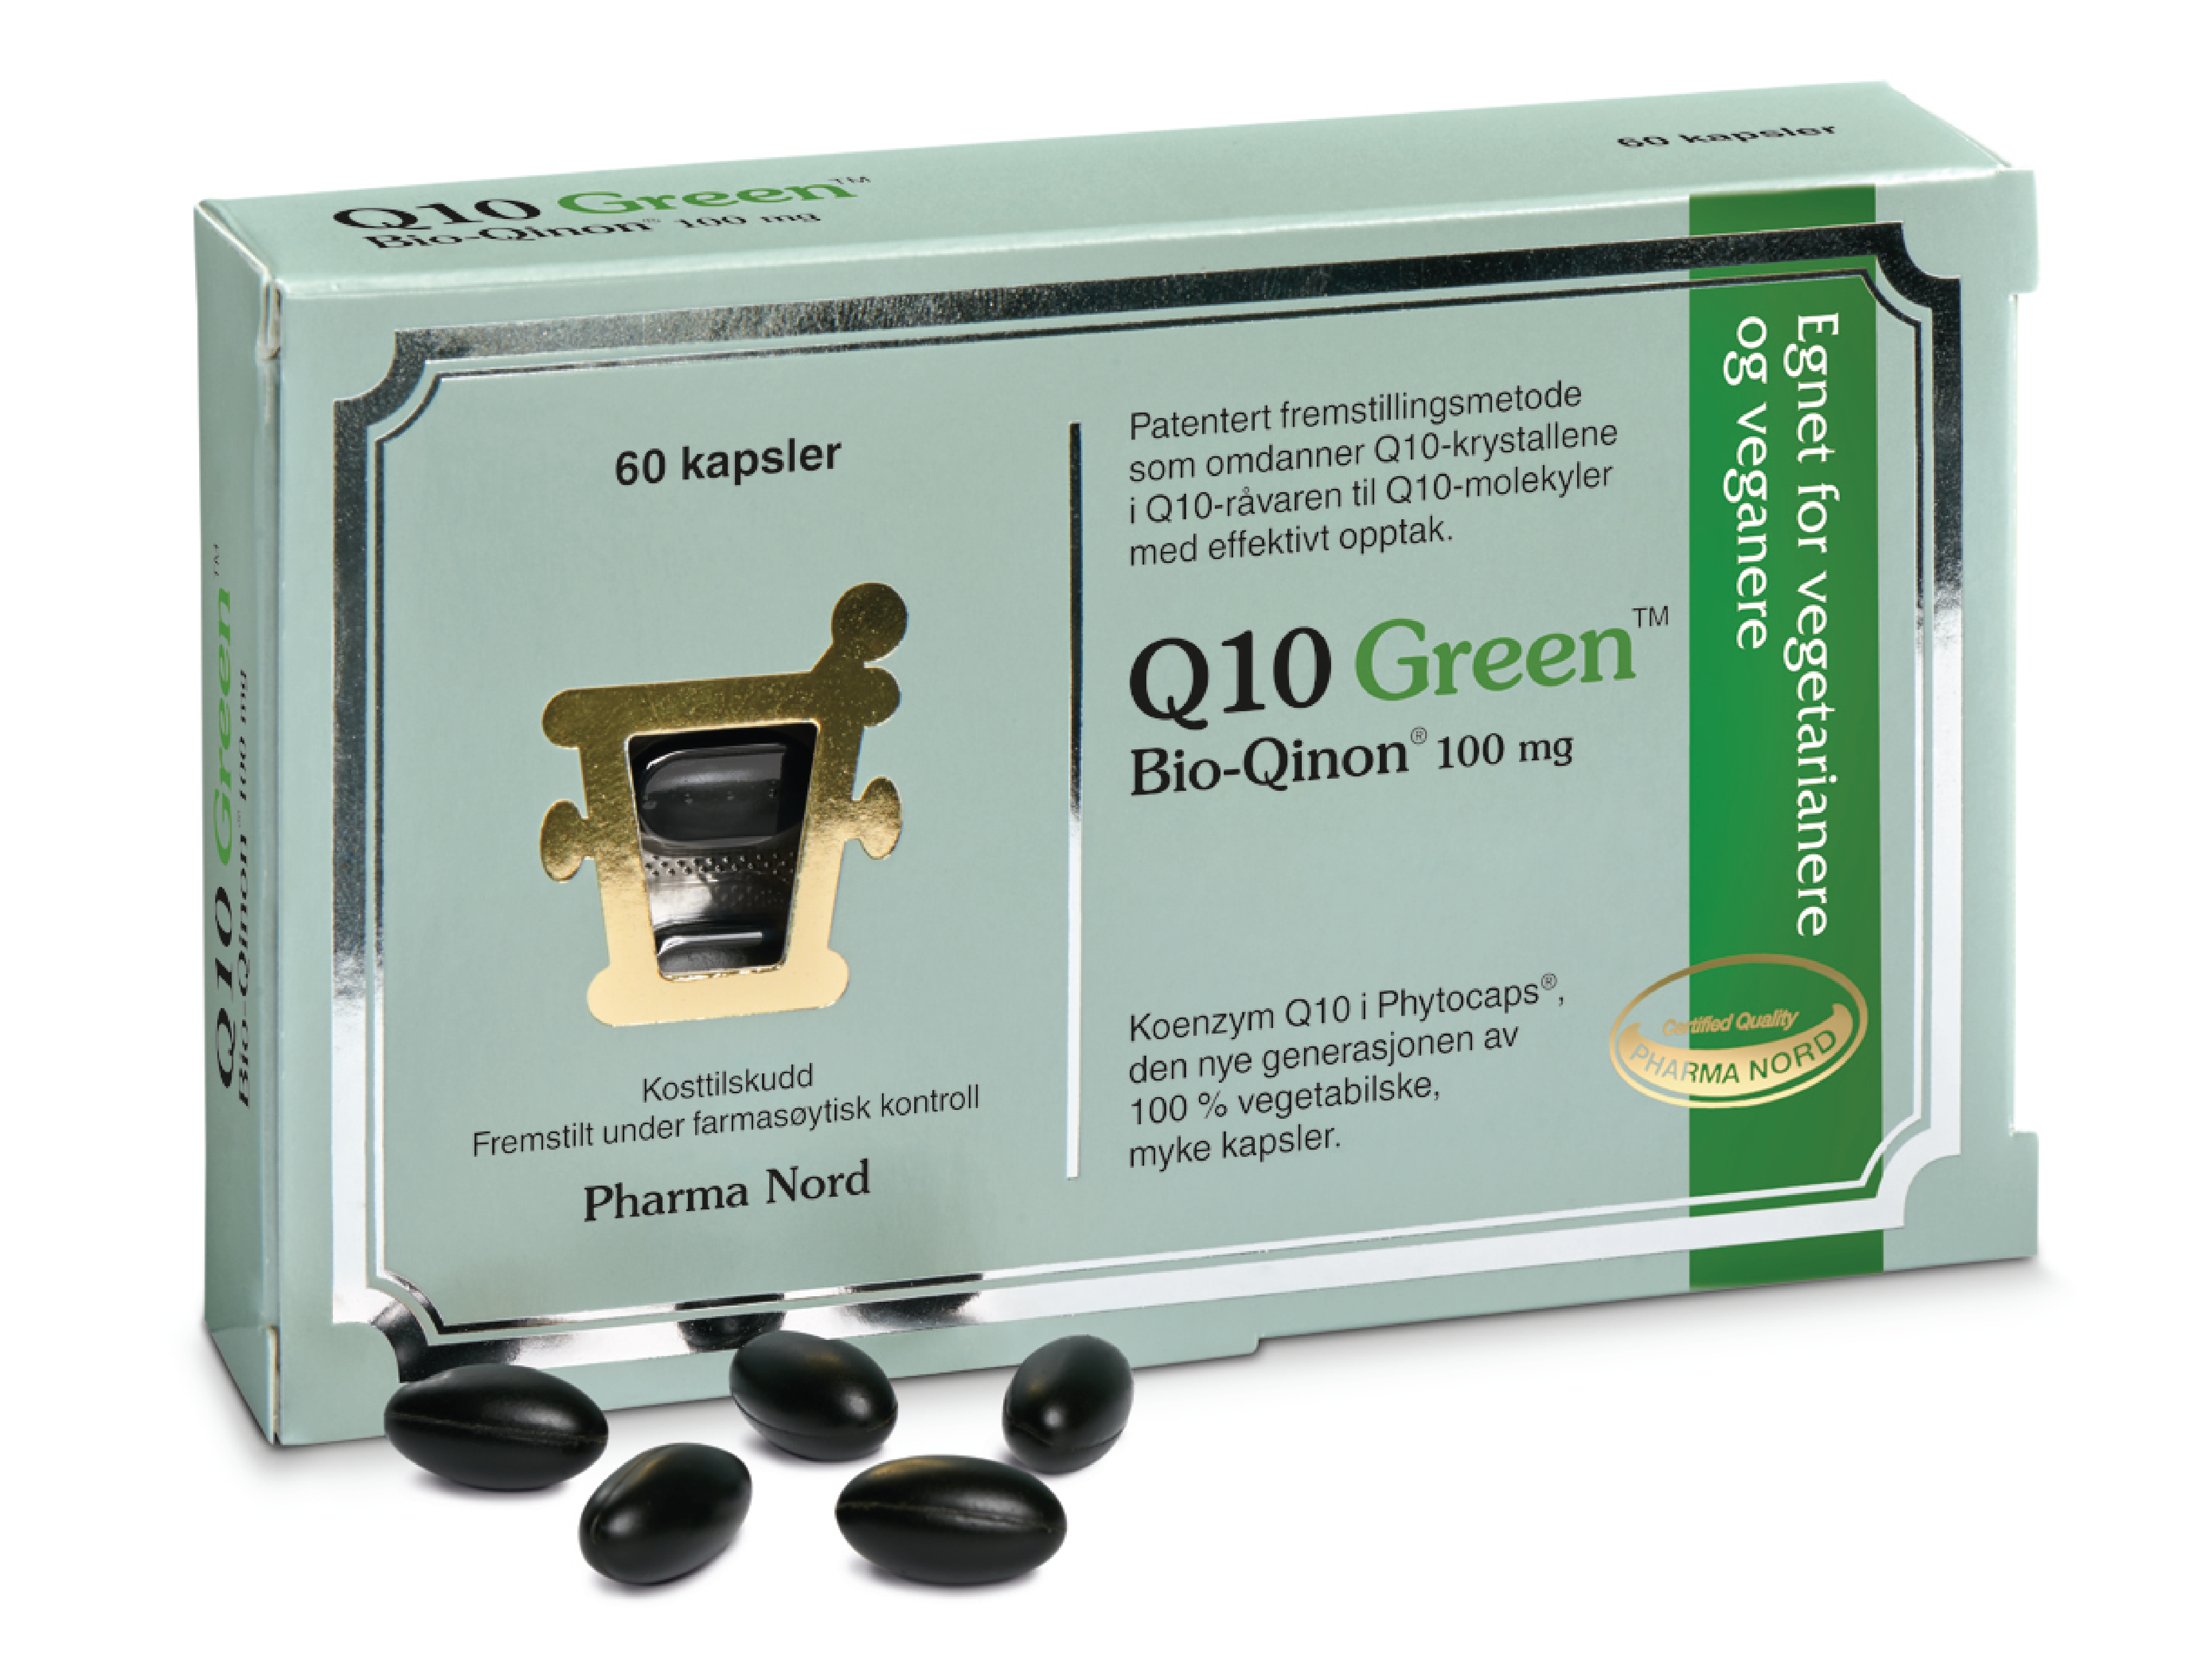 Pharma Nord Q10 Green Bio-Qinon 100 mg, 60 stk.